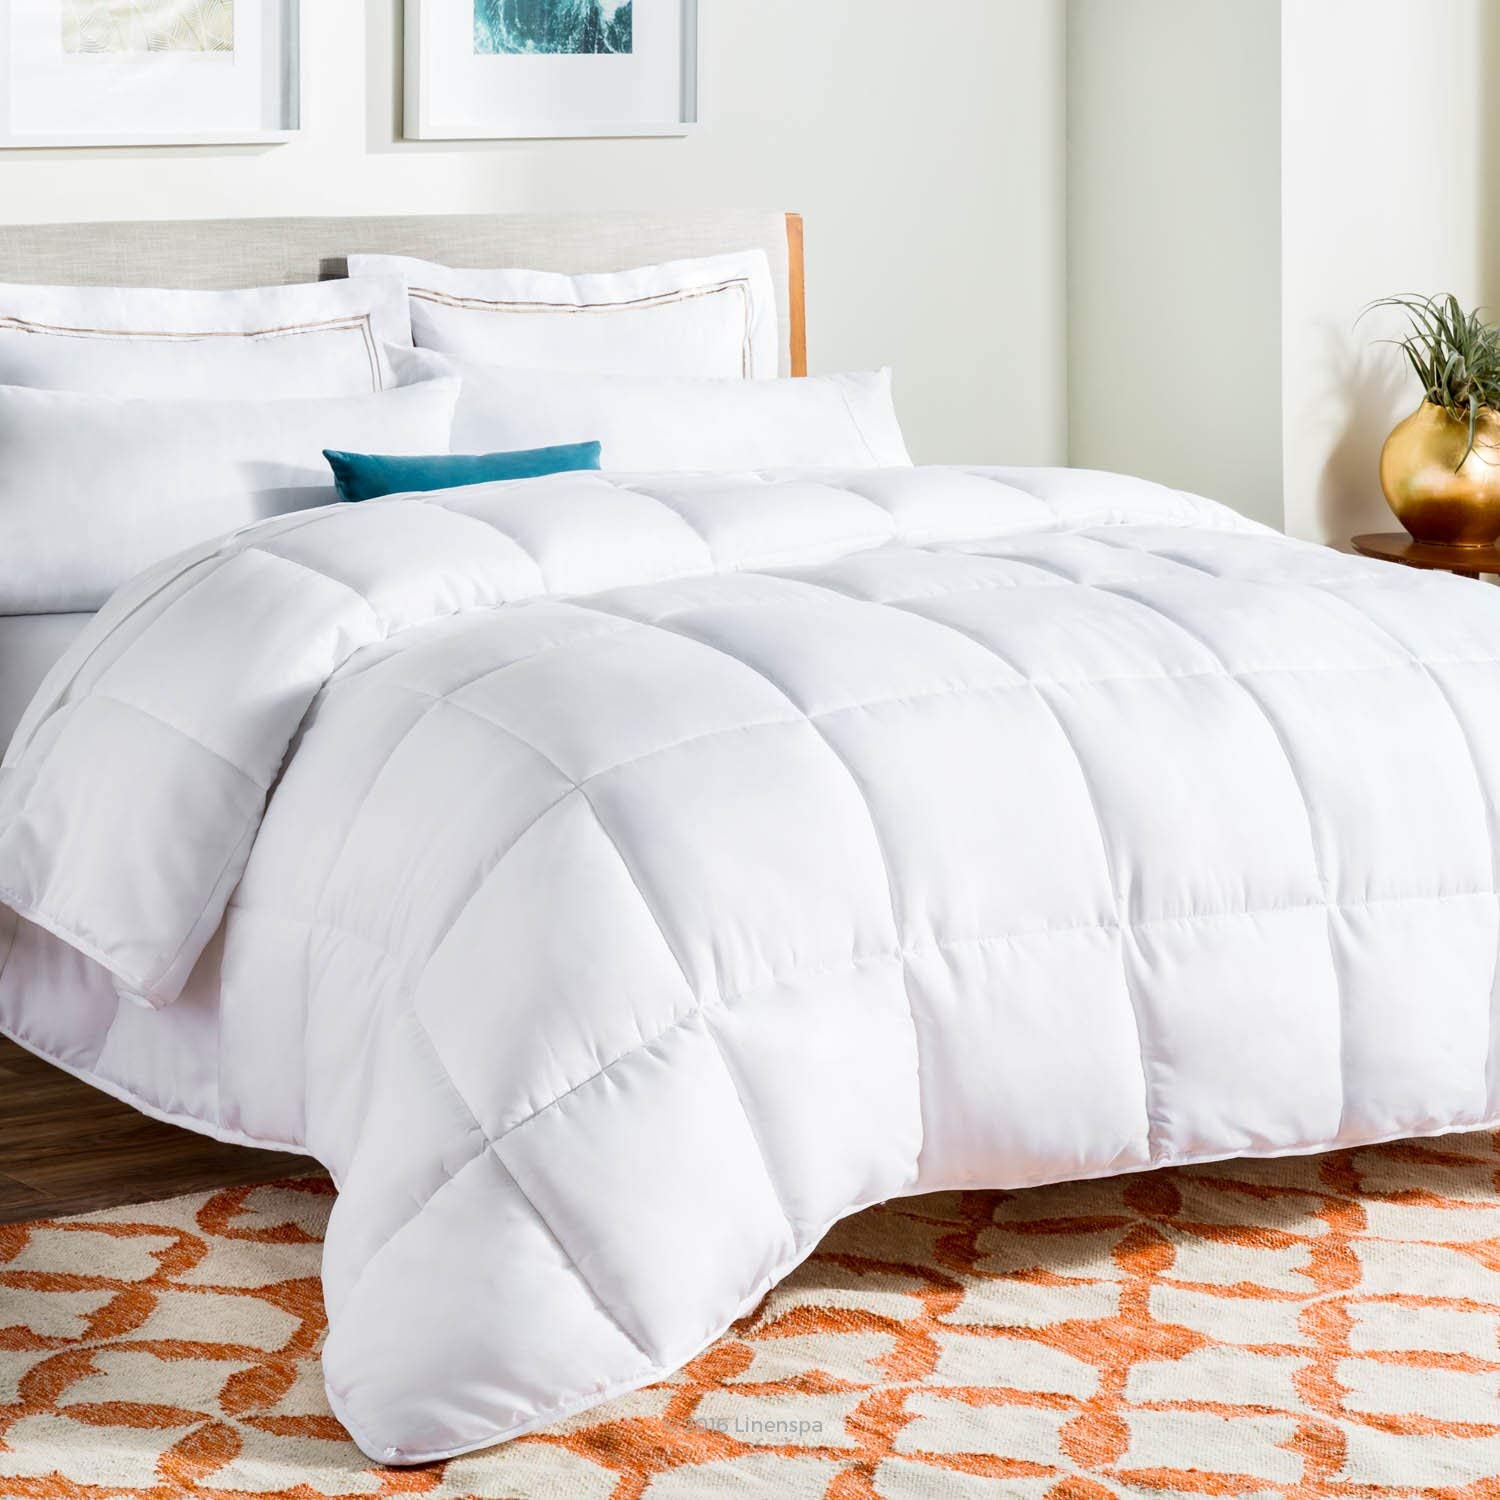 Linenspa Ultra-Soft Polyester Comforter